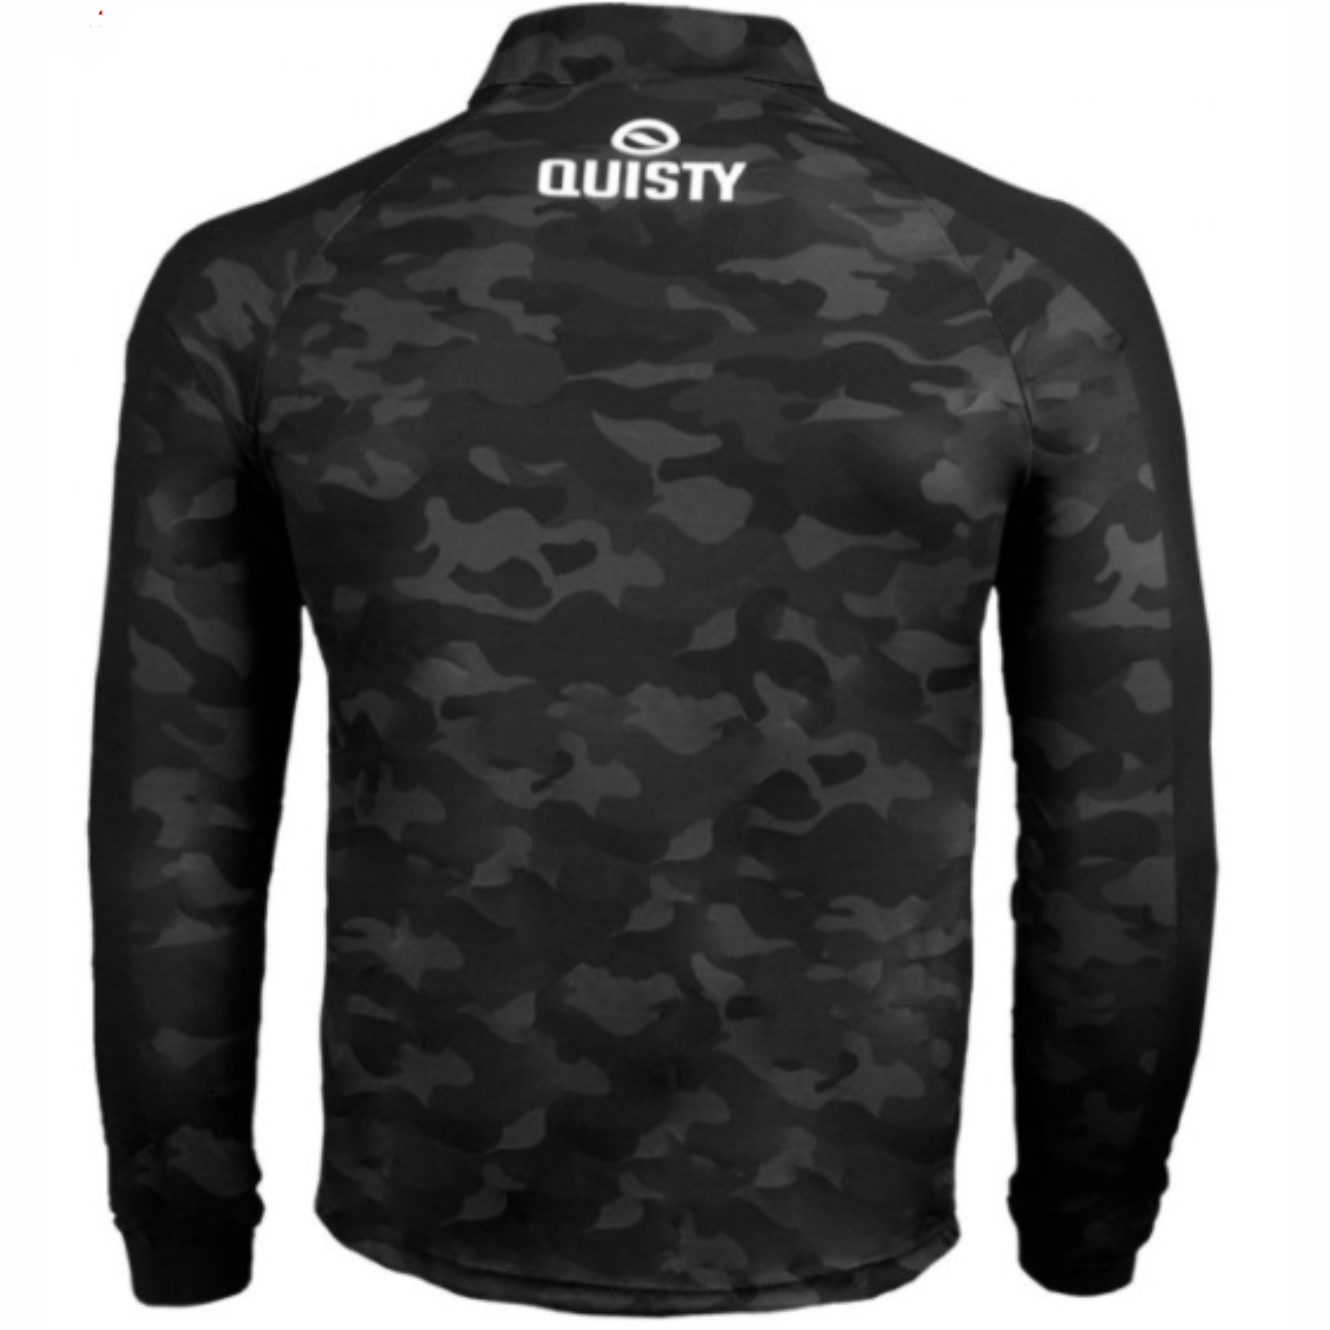 Kit Quisty Camisa + Boné + Máscara Army Black